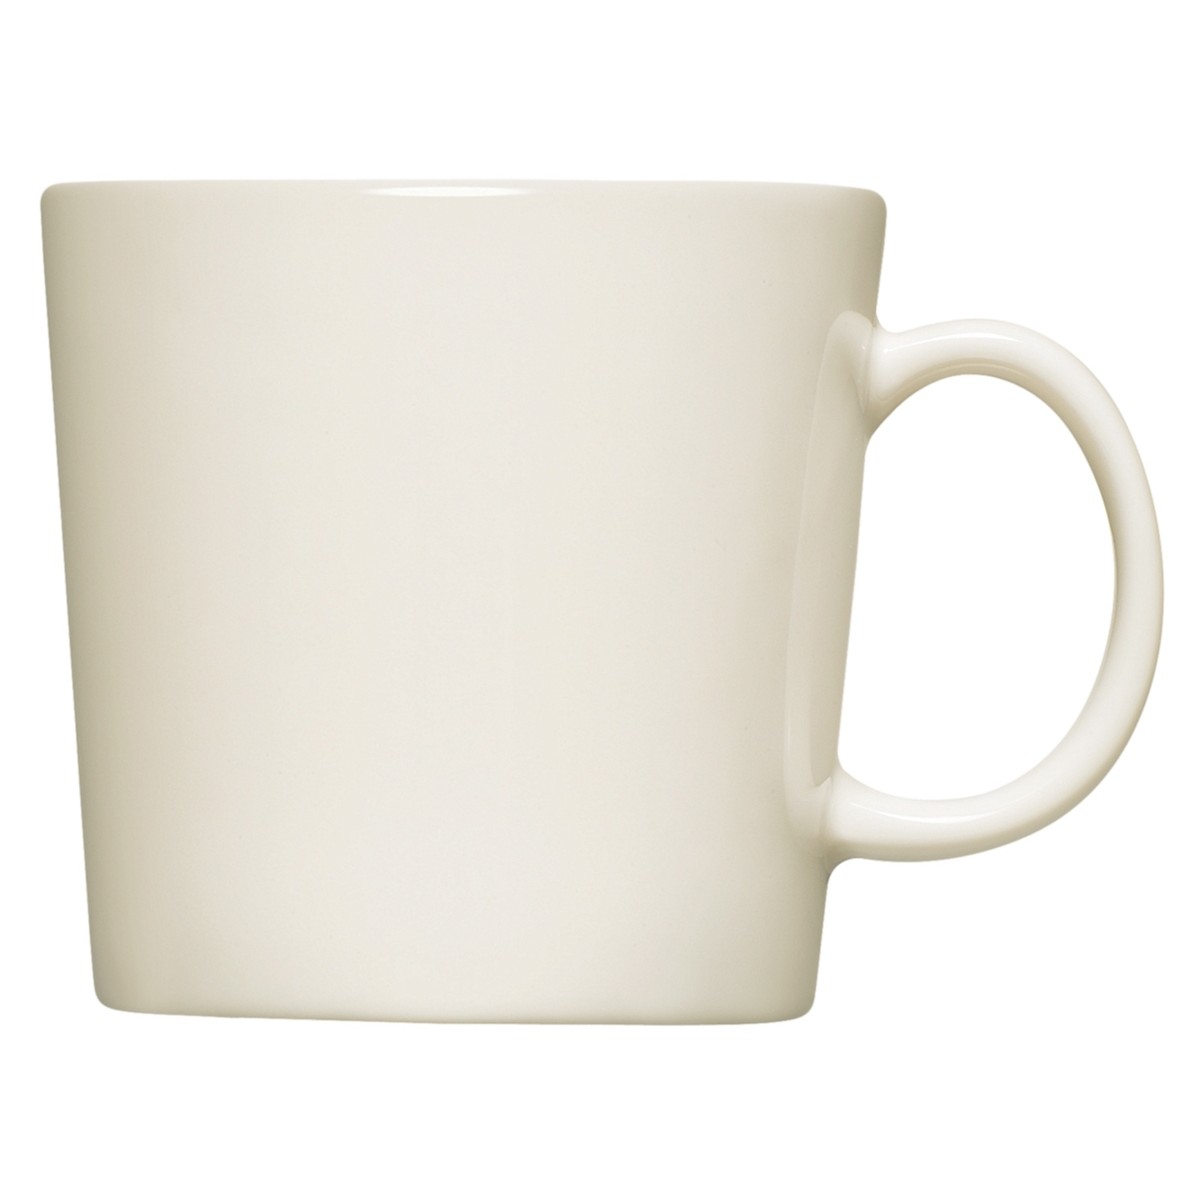 0.3l - Teema mug - white - 1005484